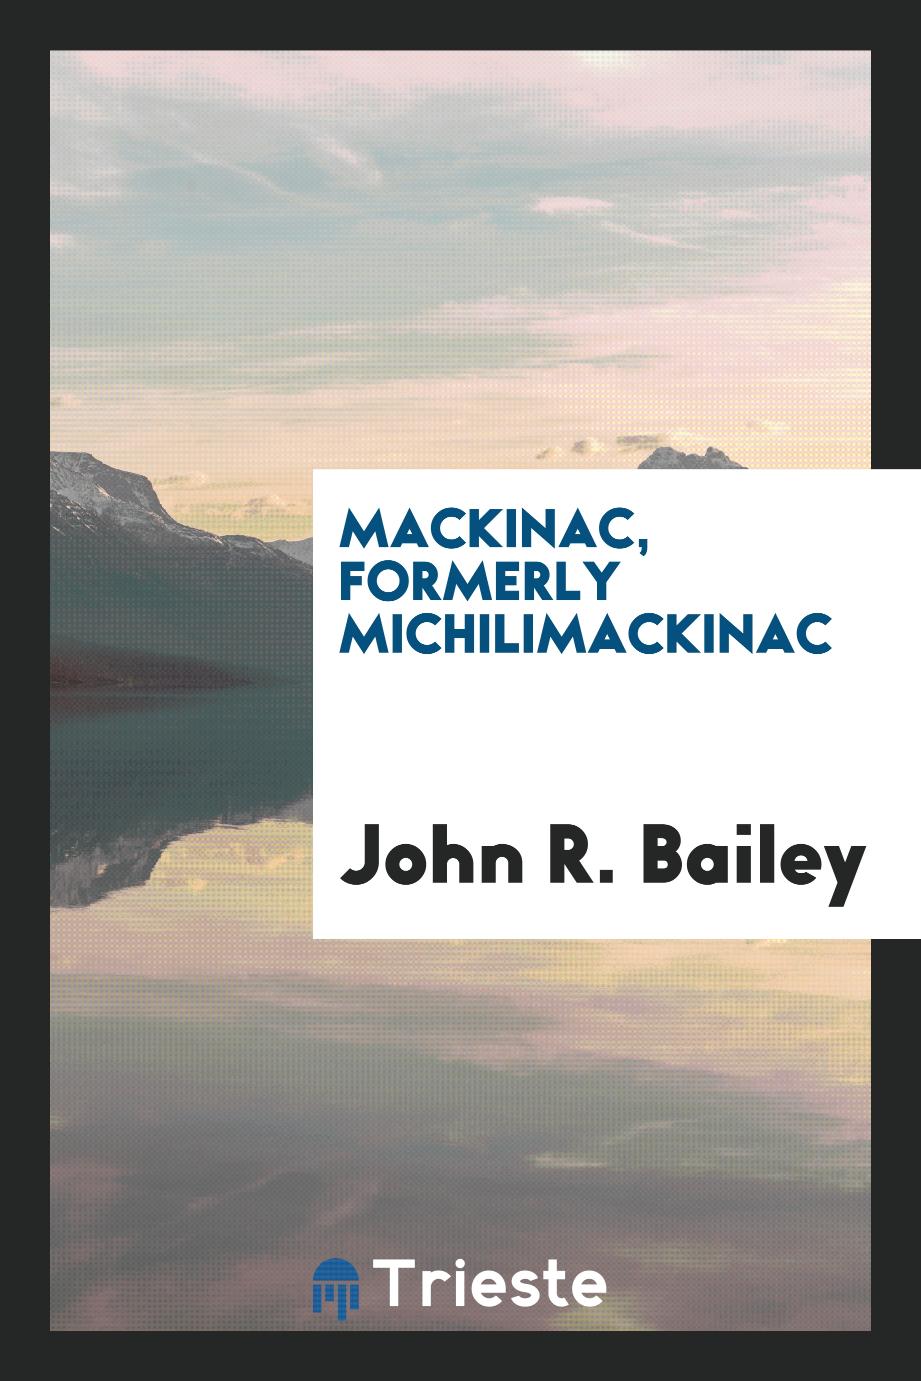 Mackinac, formerly Michilimackinac